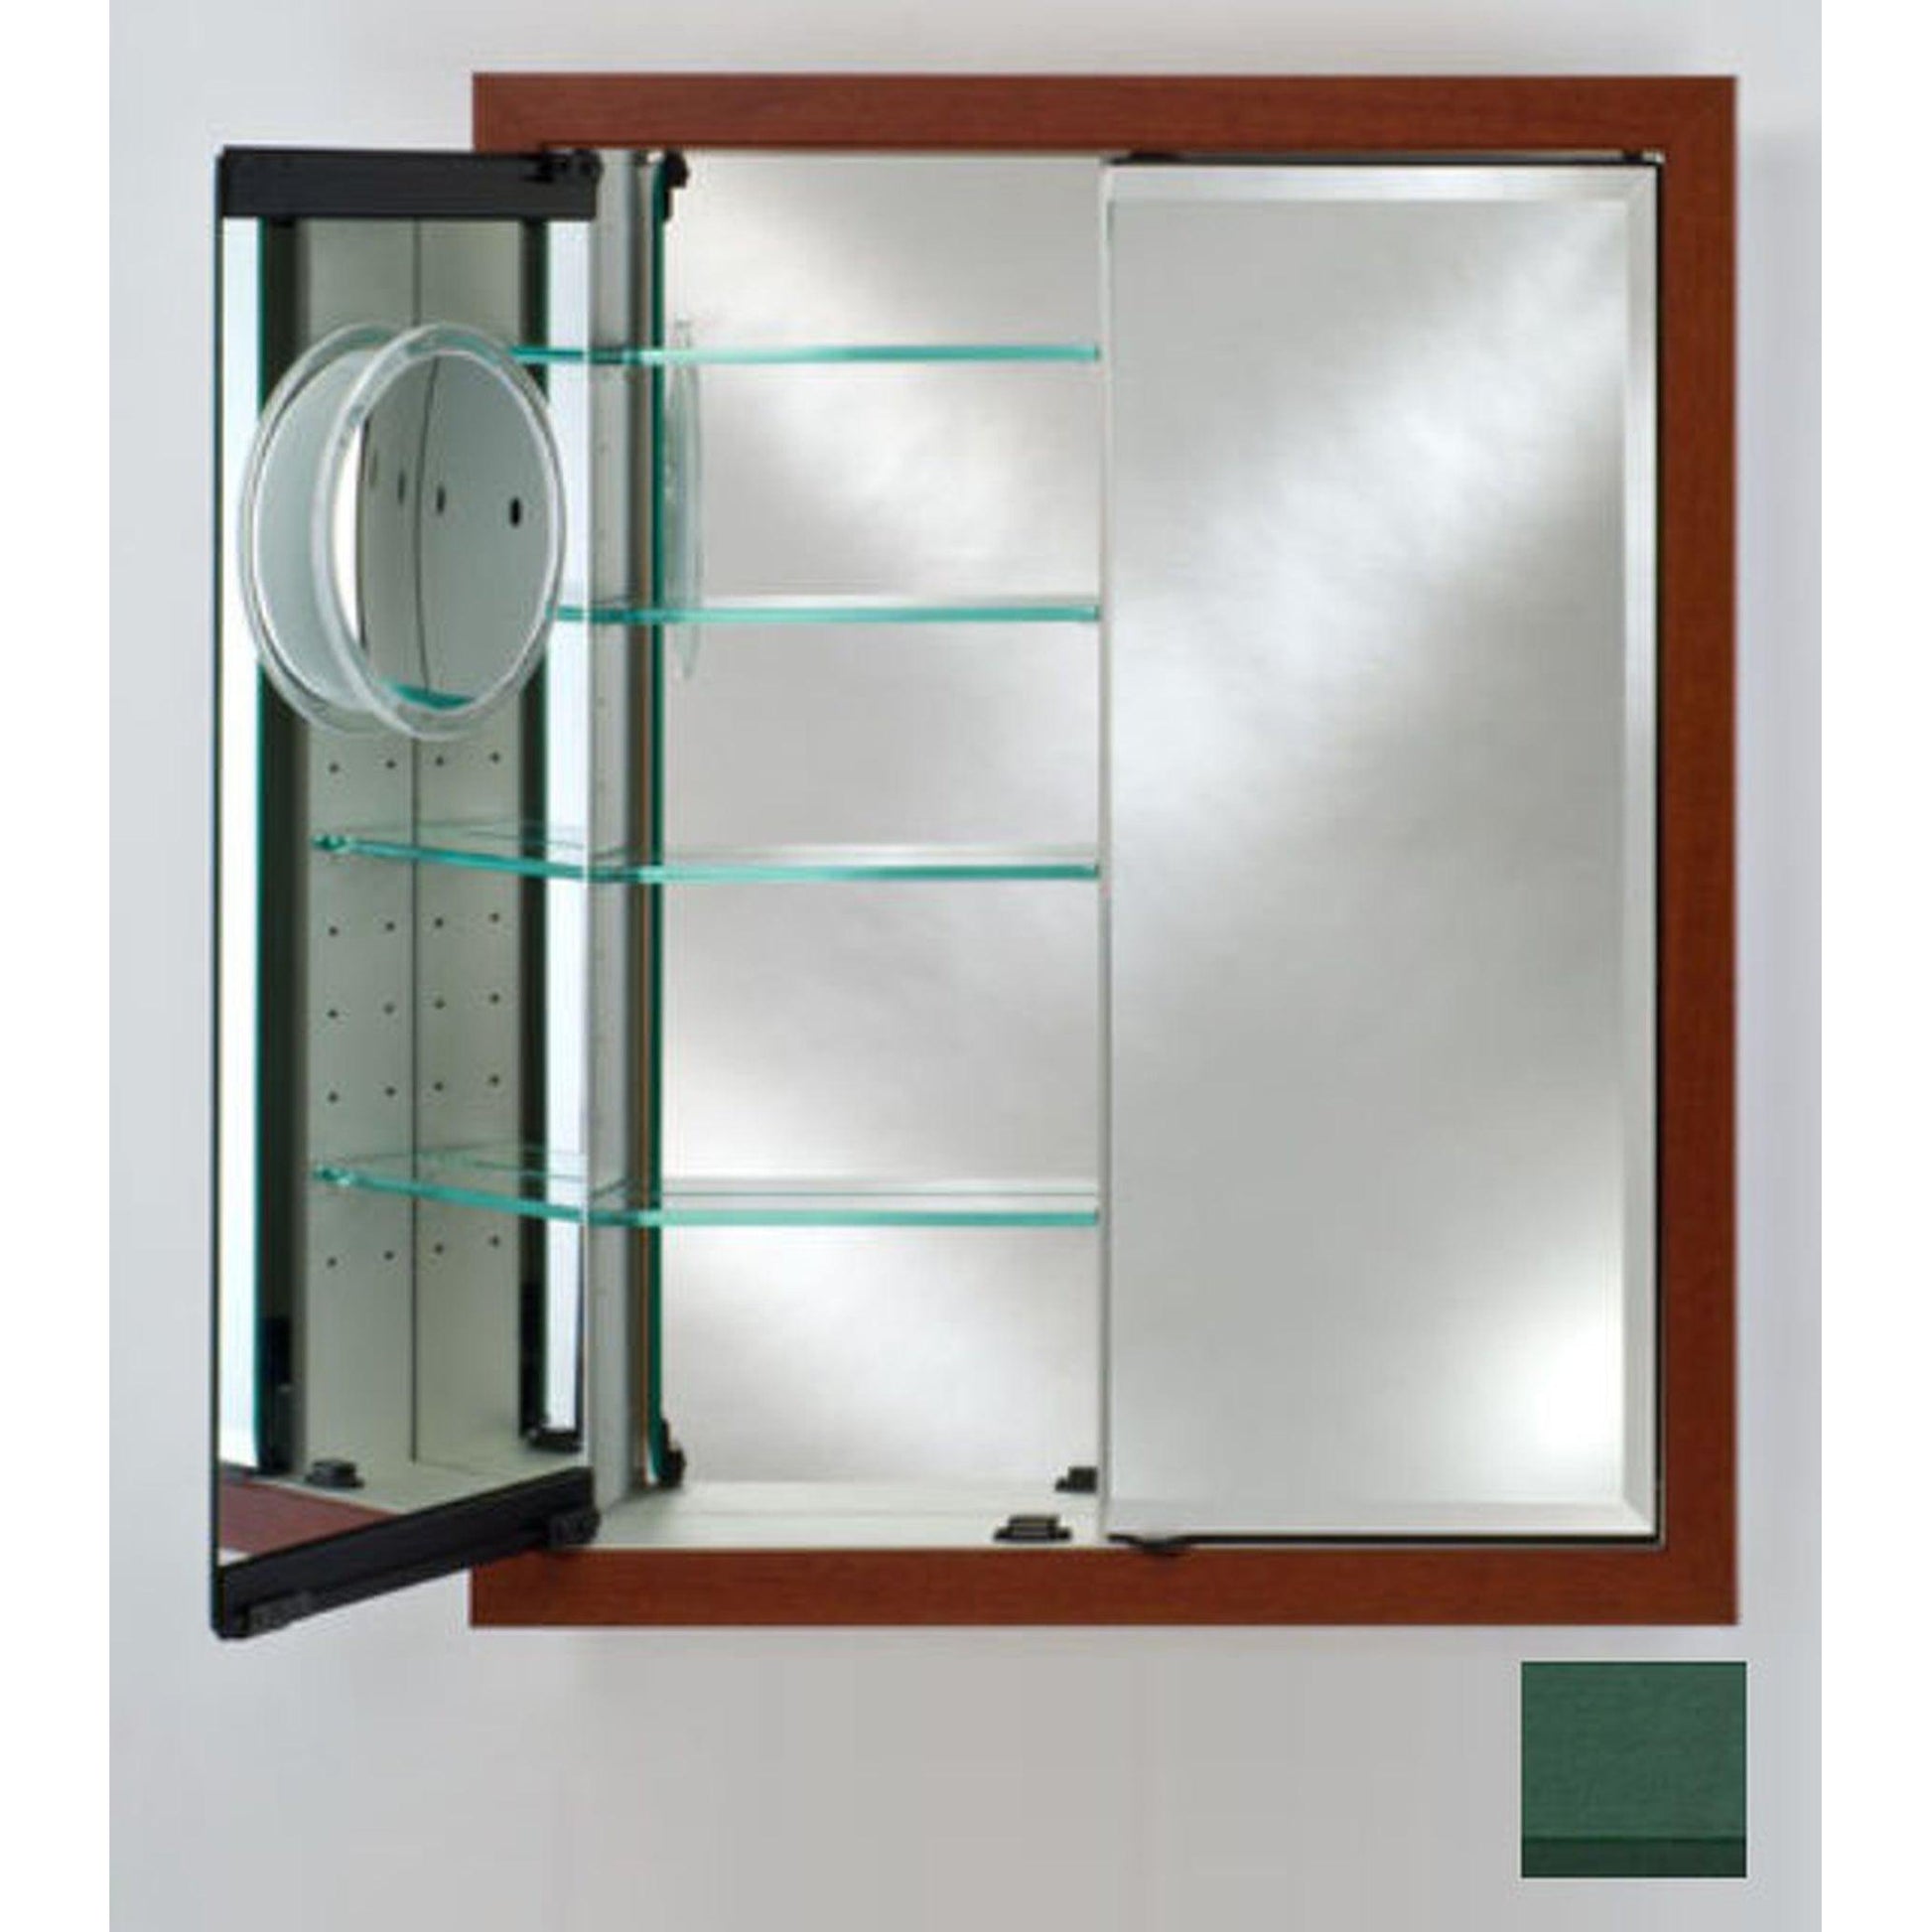 Afina Signature 31" x 36" Colorgrain Green Recessed Double Door Medicine Cabinet With Beveled Edge Mirror